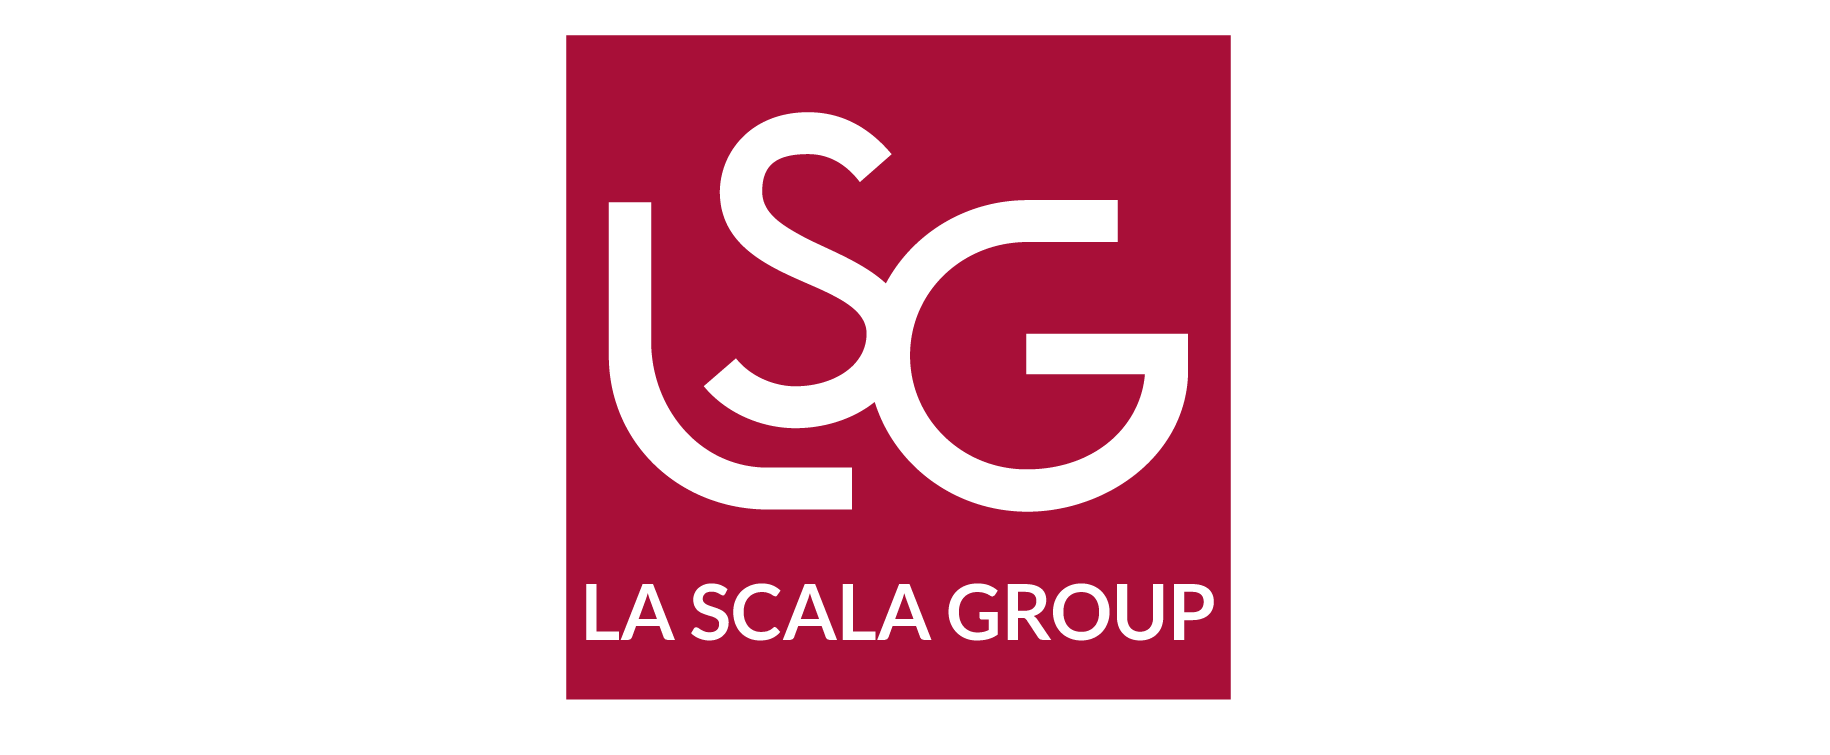 LaScala Group